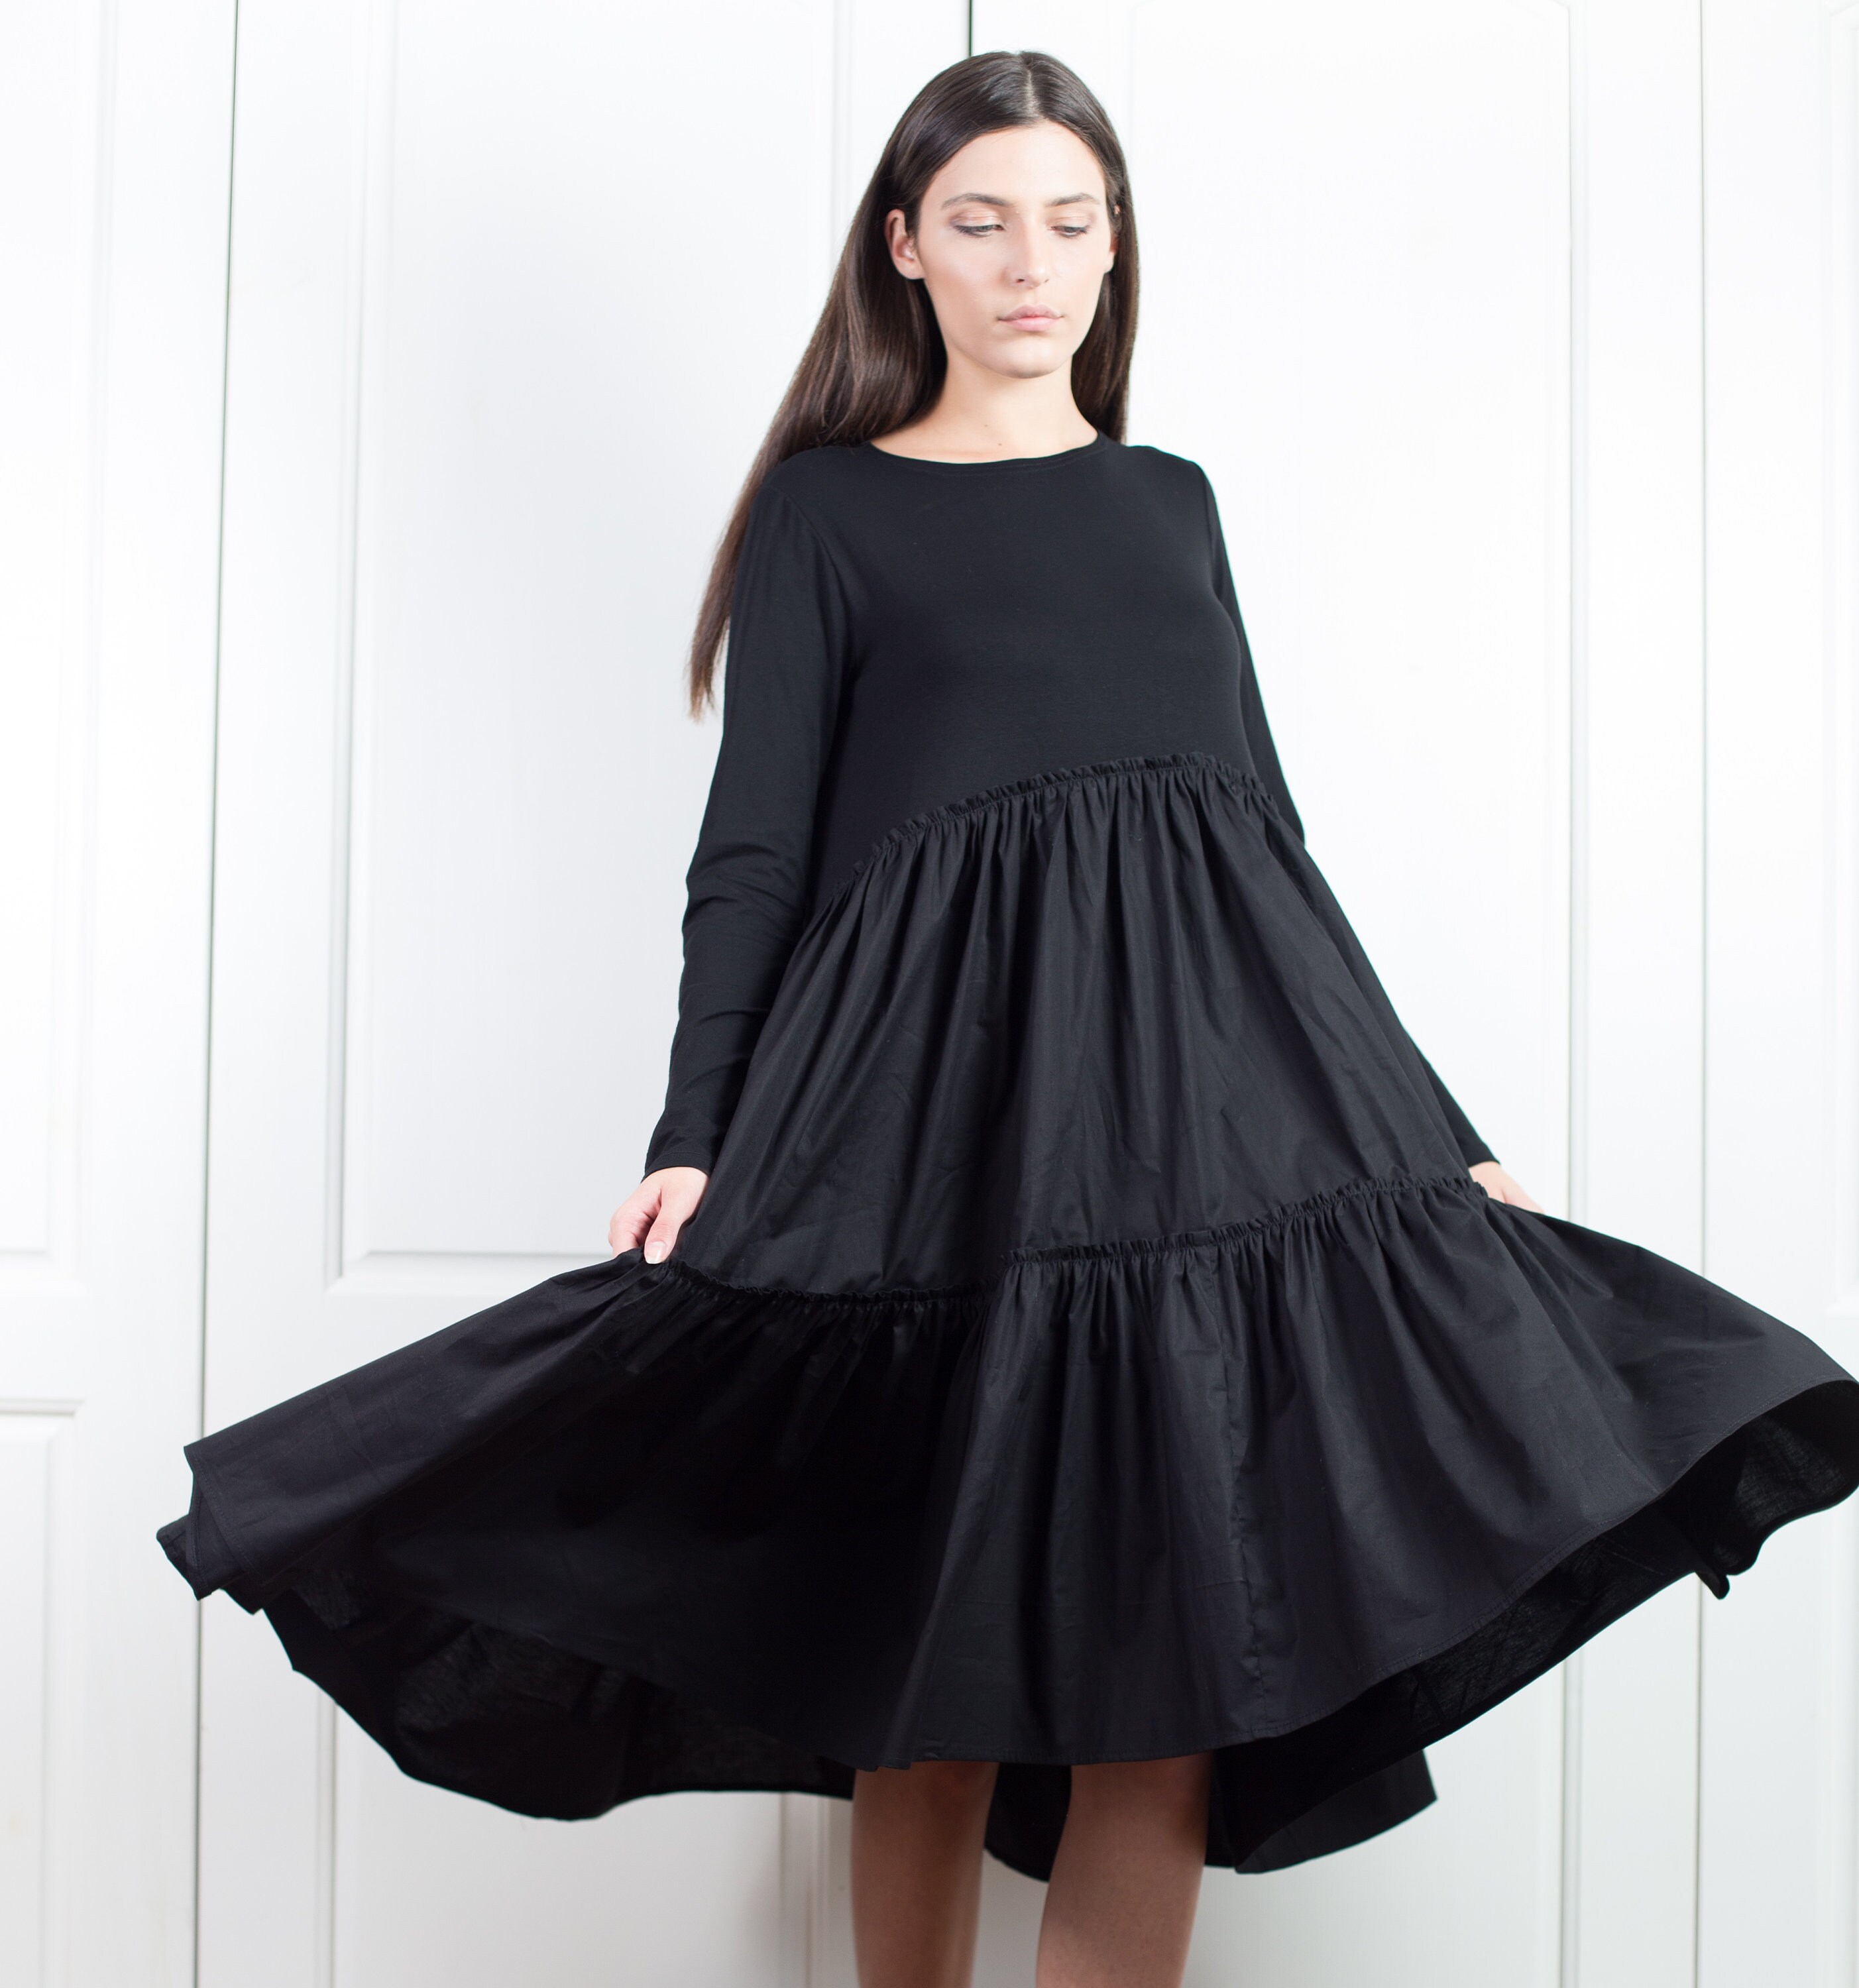 Avant Garde Clothing Lolita Dress Gothic Lolita Dress - Etsy